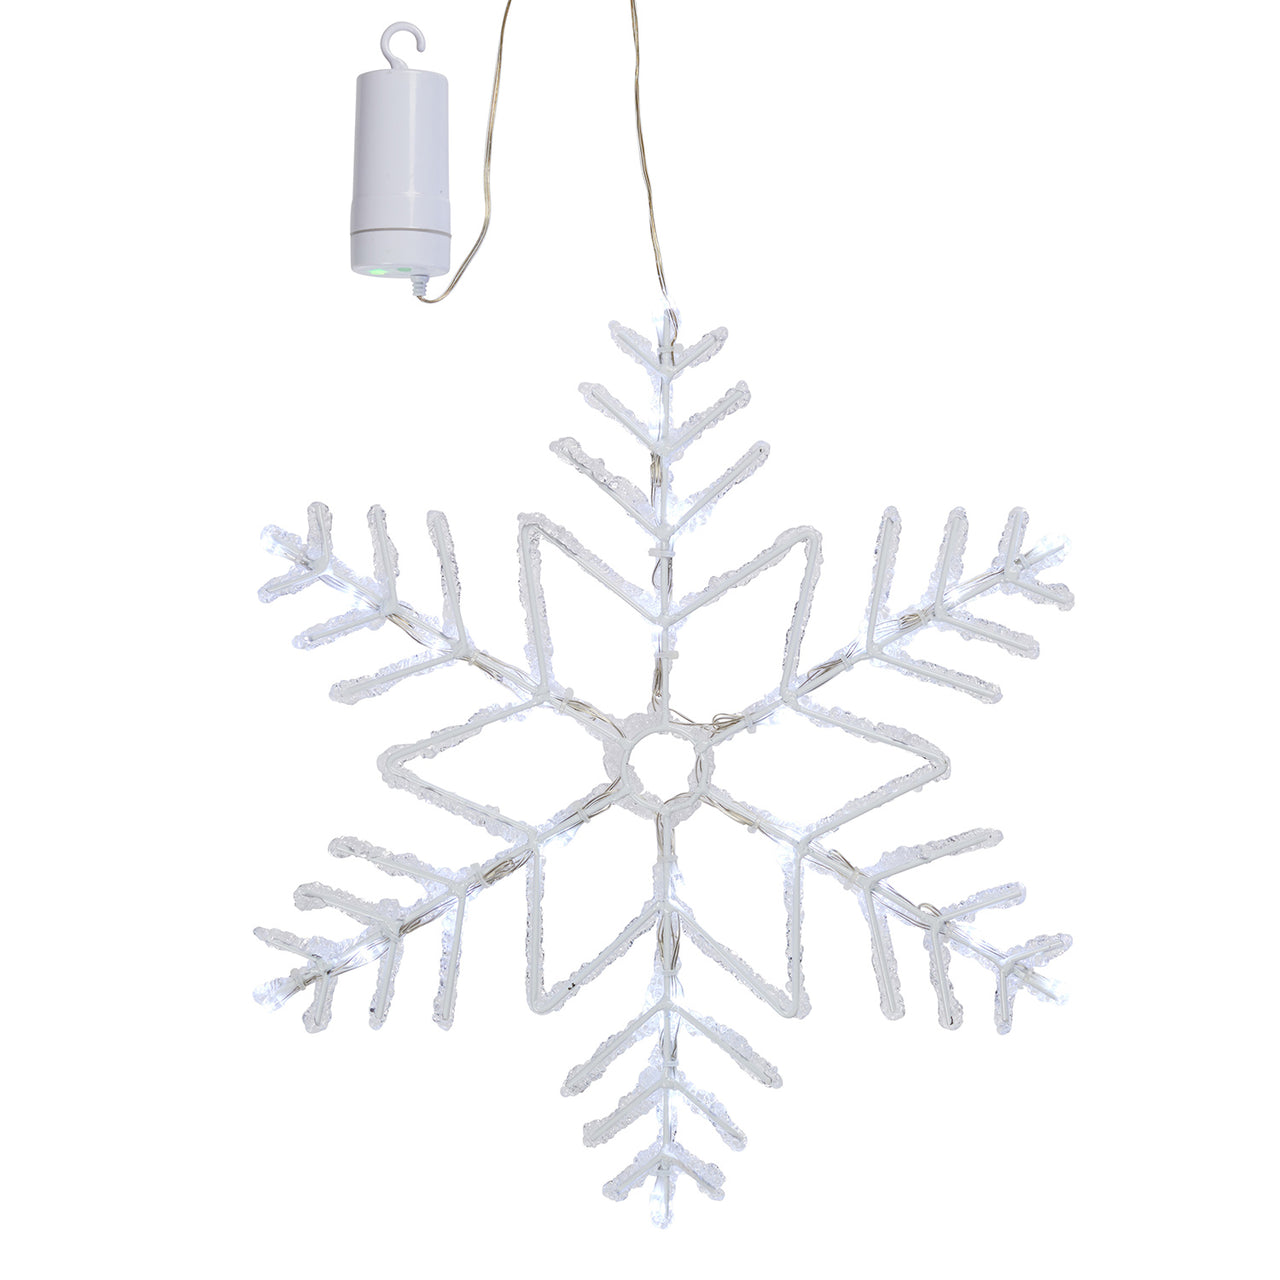 40cm Snowflake Outdoor Christmas Light